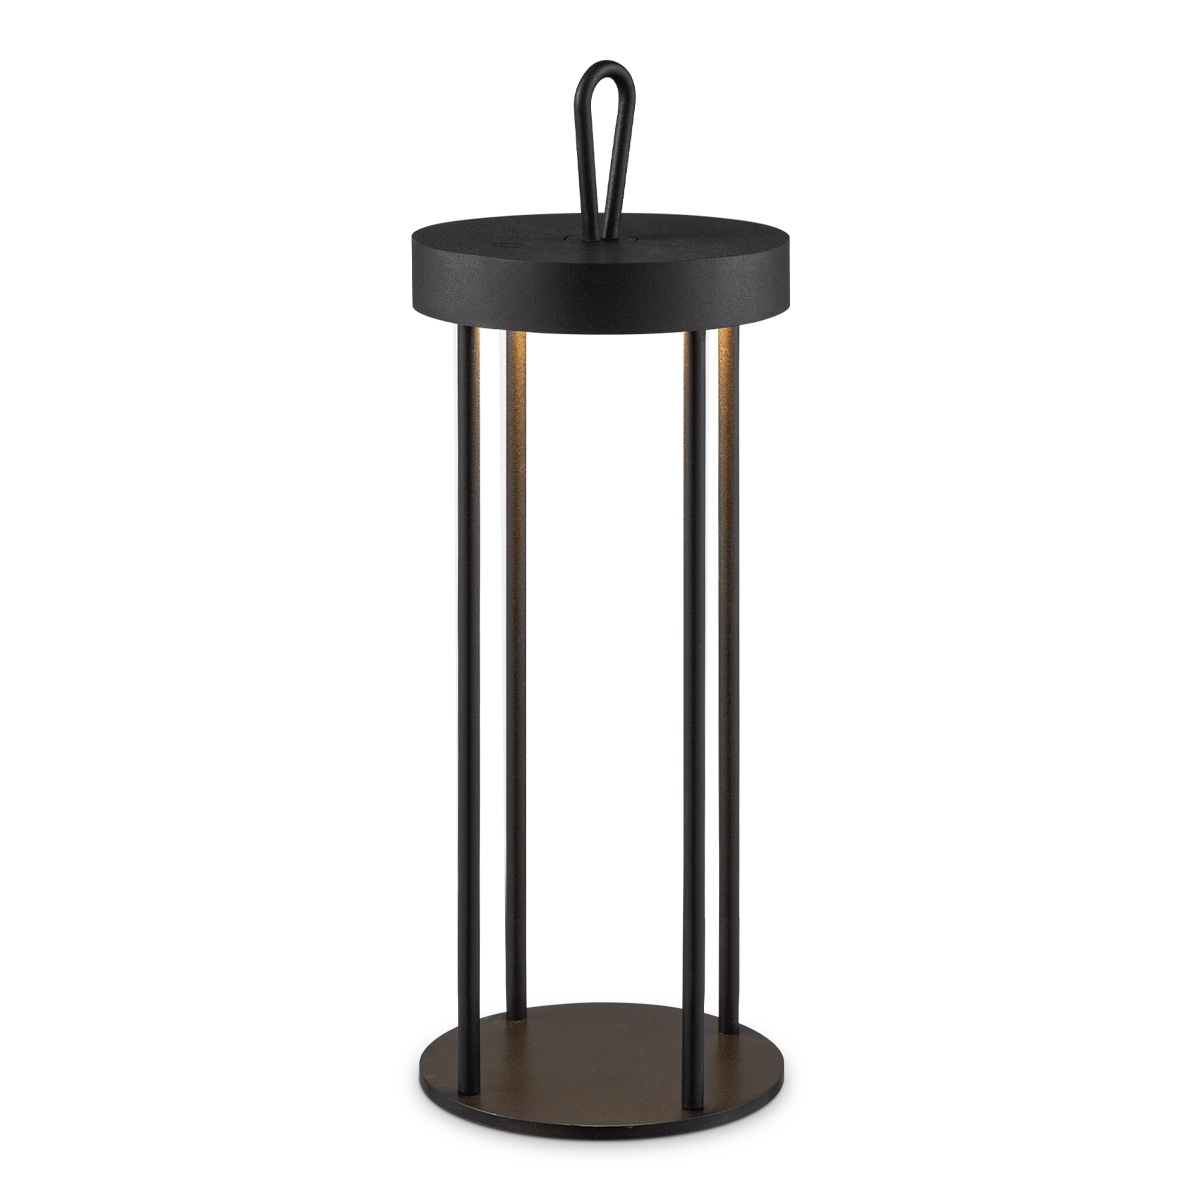 Tangla lighting - TLT7654-01BK - LED table lamp - outdoor lighting - rechargeable plastic and metal - touch dimmer - black - pavilion